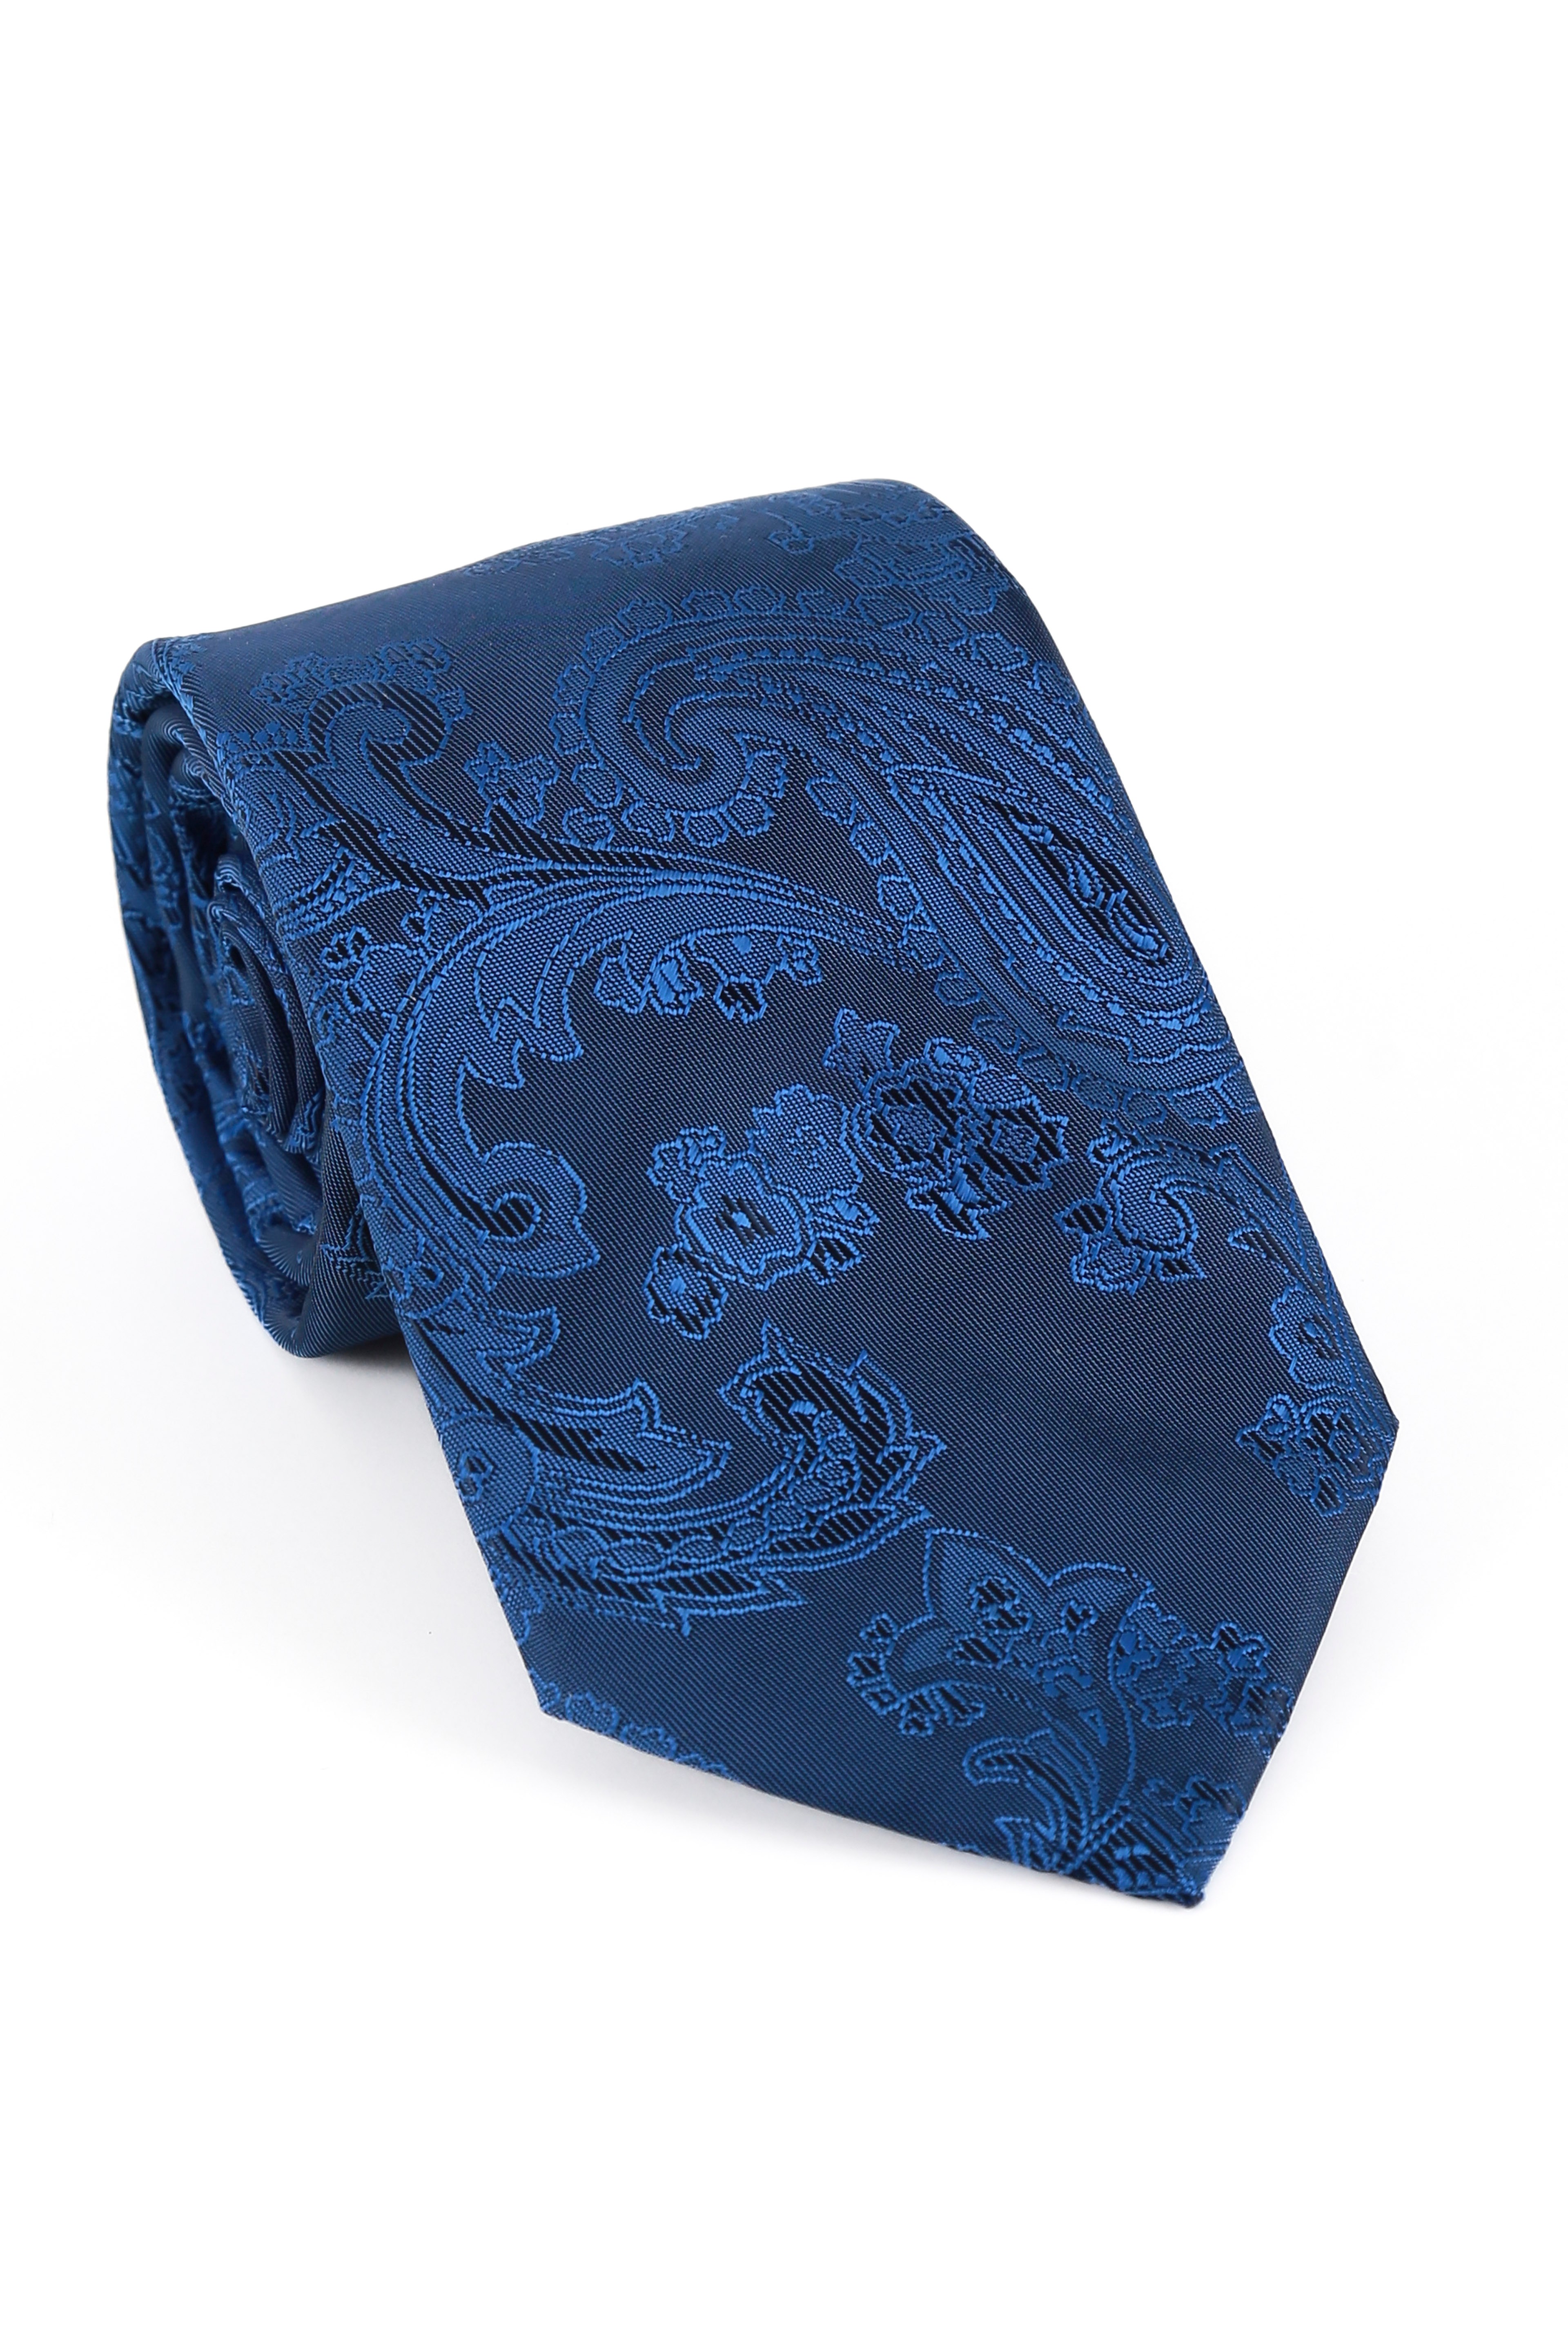 Men's Paisley Tie Cufflink Set - Royal Blue